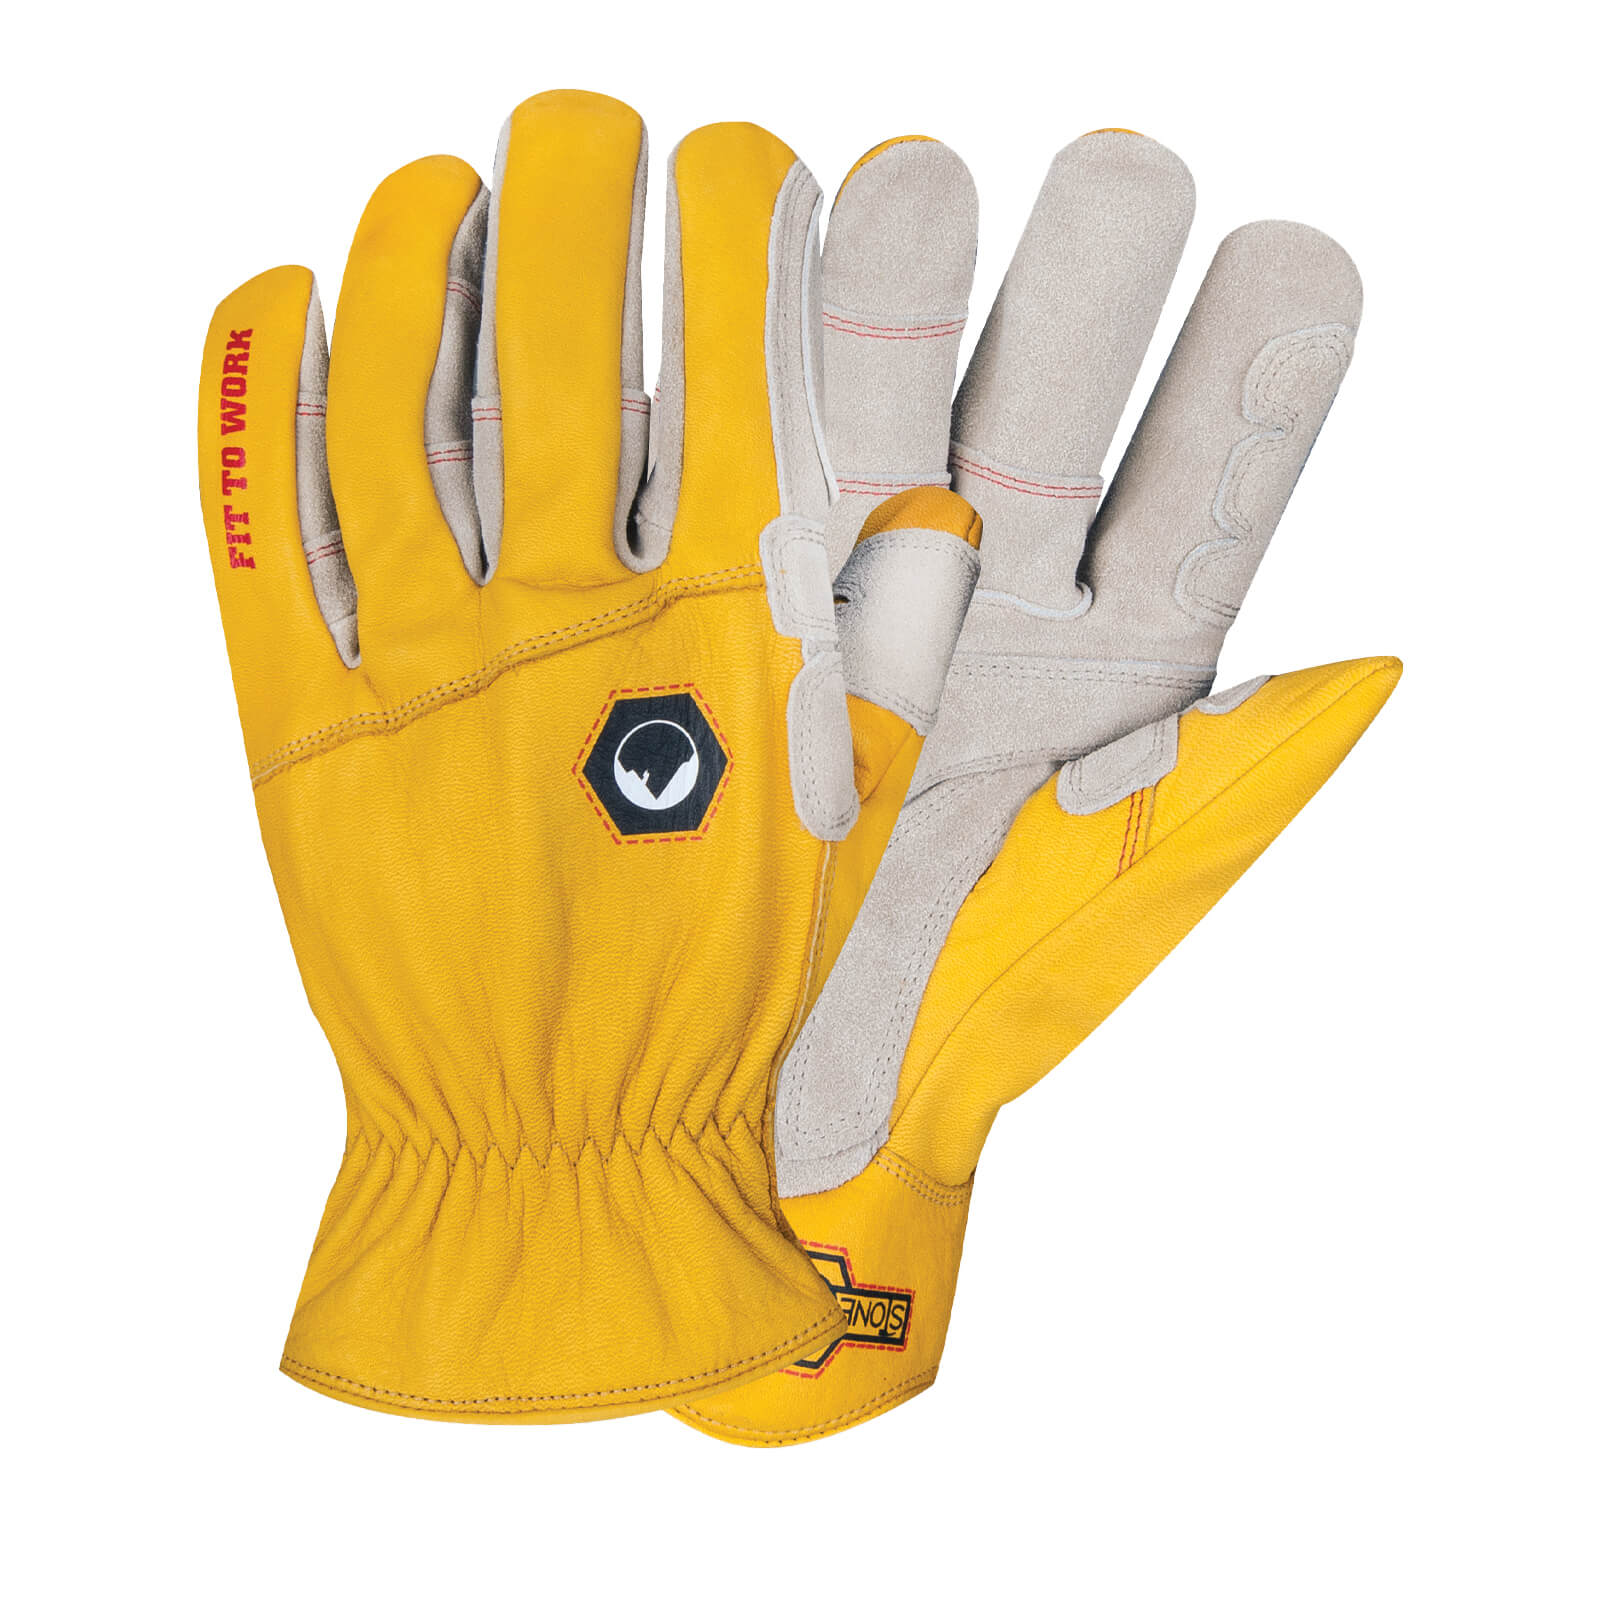 StoneBreaker Rancher Leather Work Gloves - Extra Large